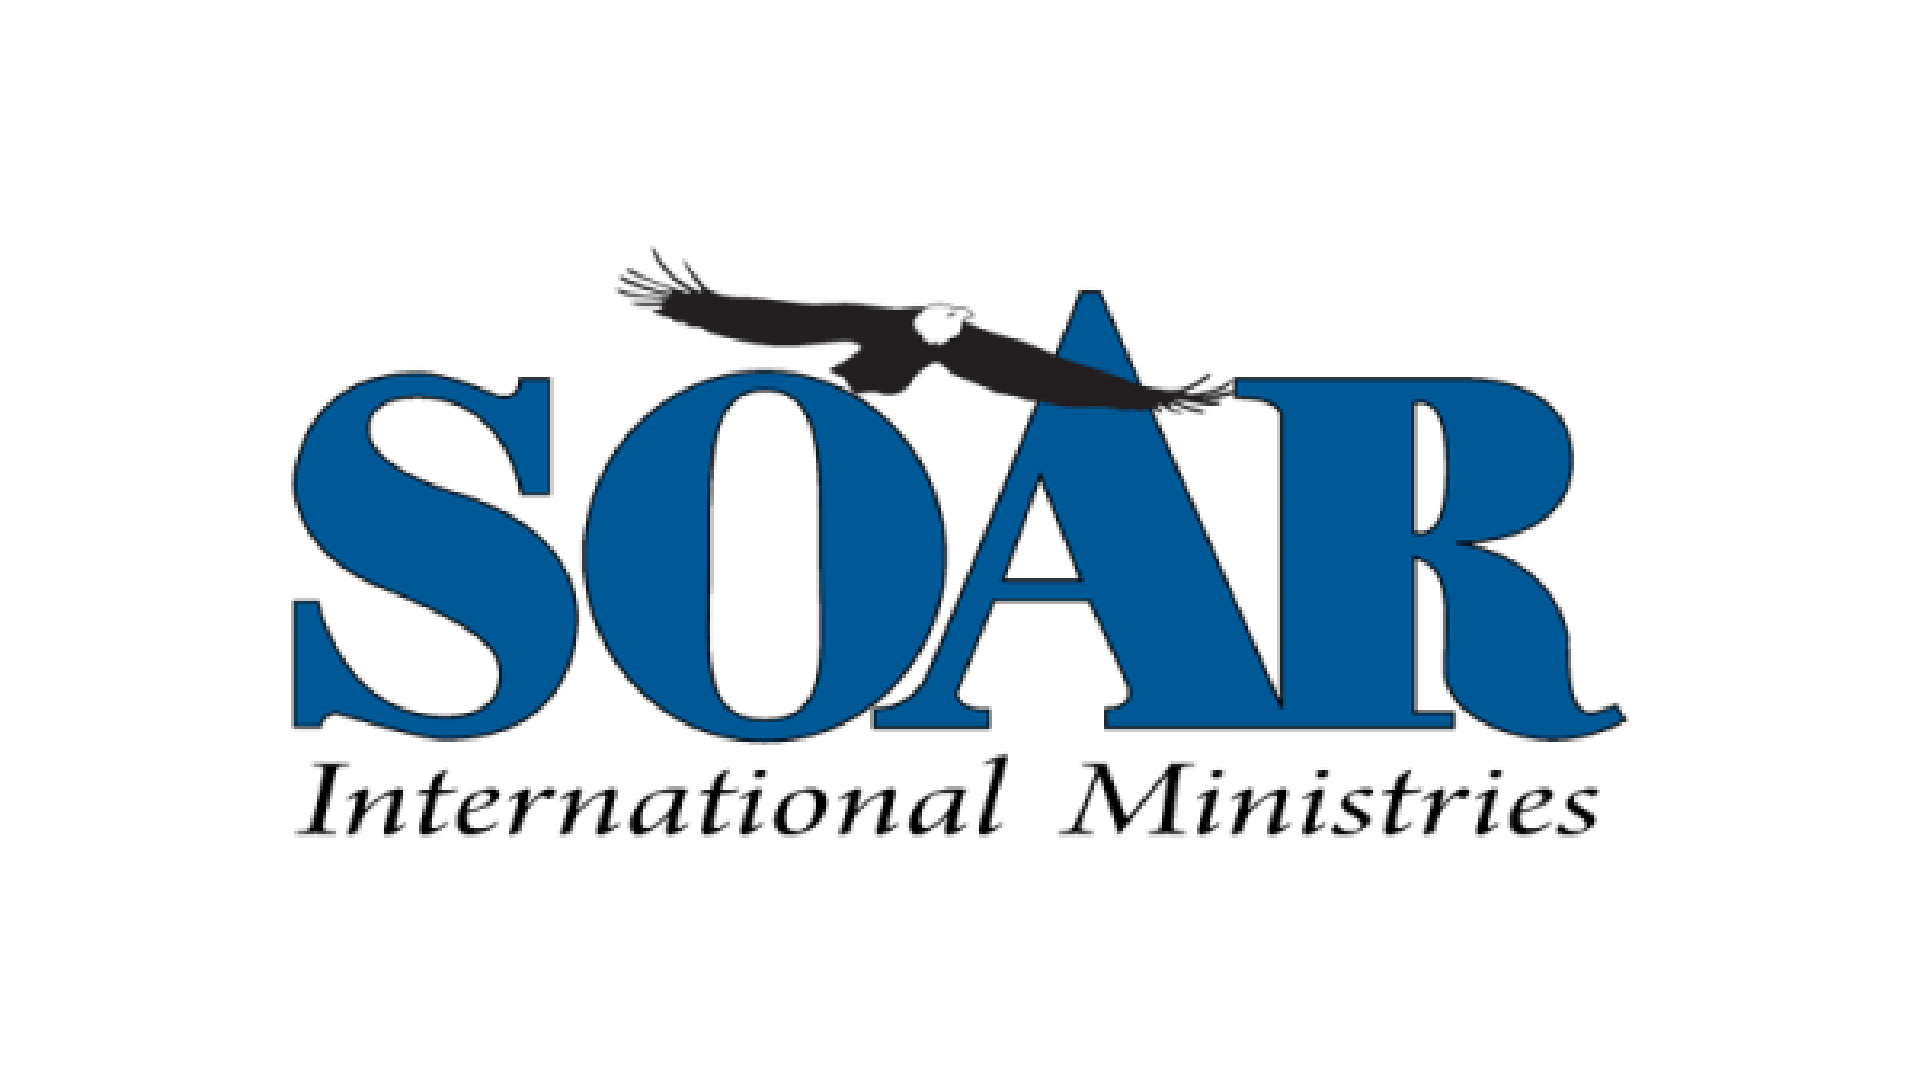 Soar International Ministries logo